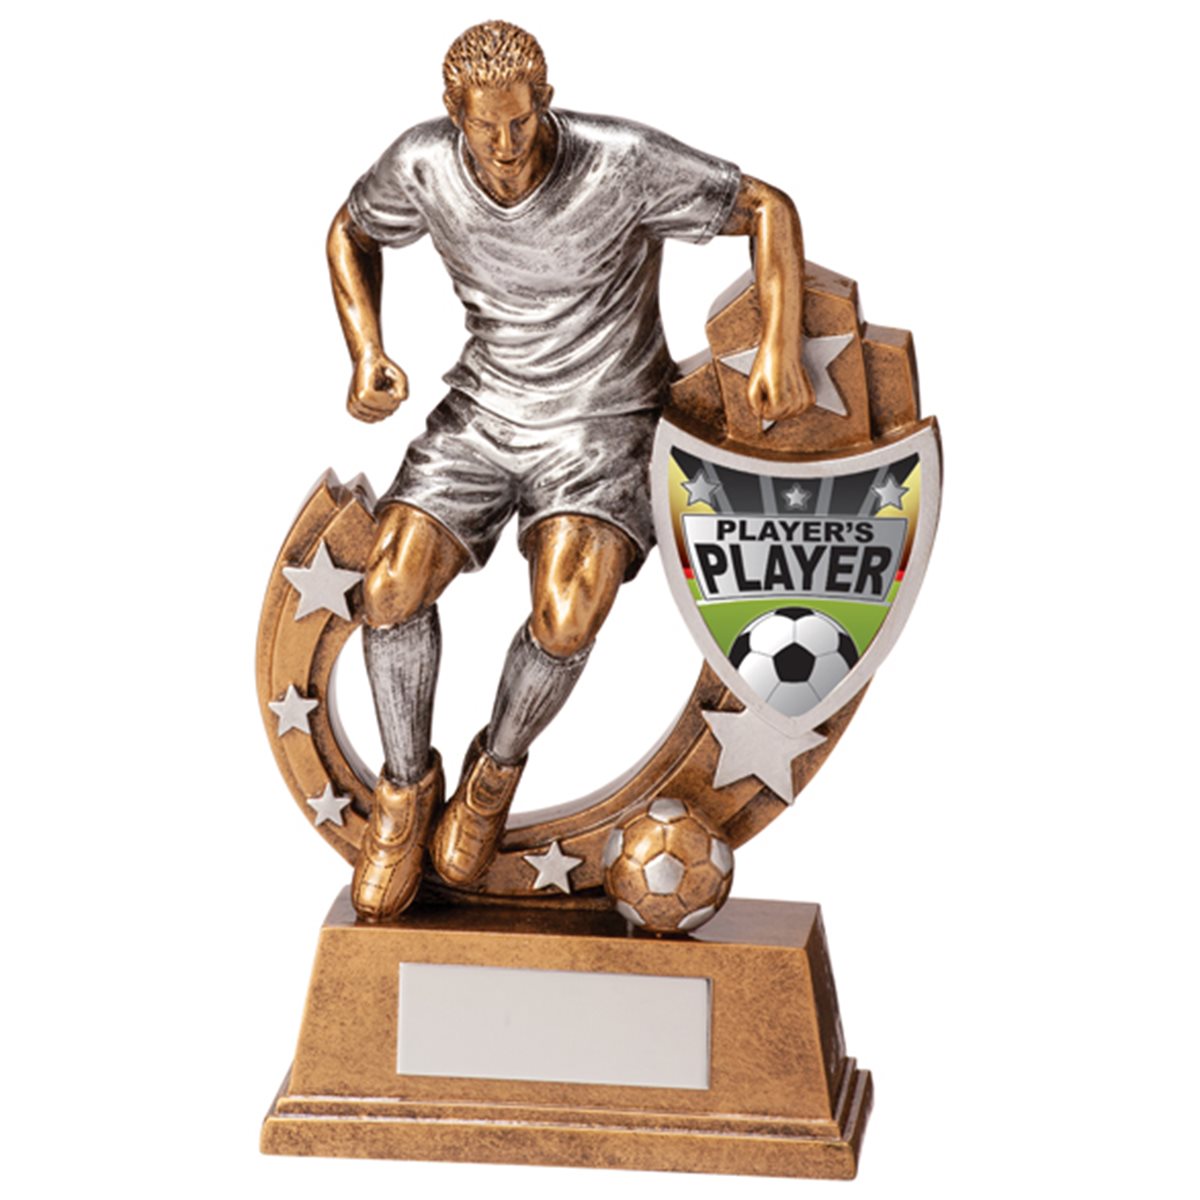 Galaxy Male Player's Player Football Trophy RF20647